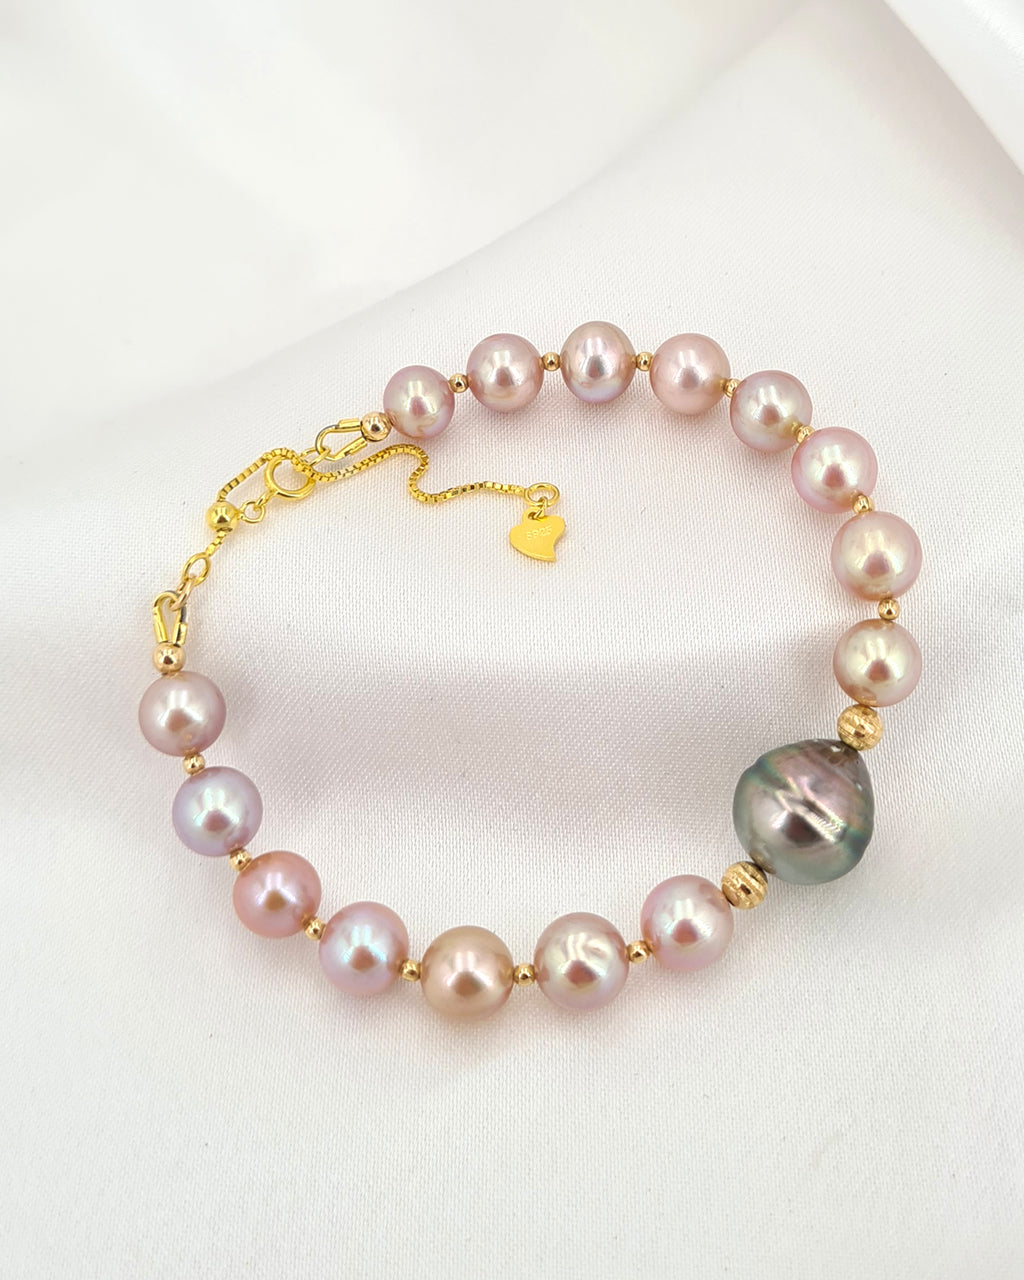 Tahitian Pearl Bracelet with Pink Freshwater Pearl | Handmade Pearl Jewelry | Singapore